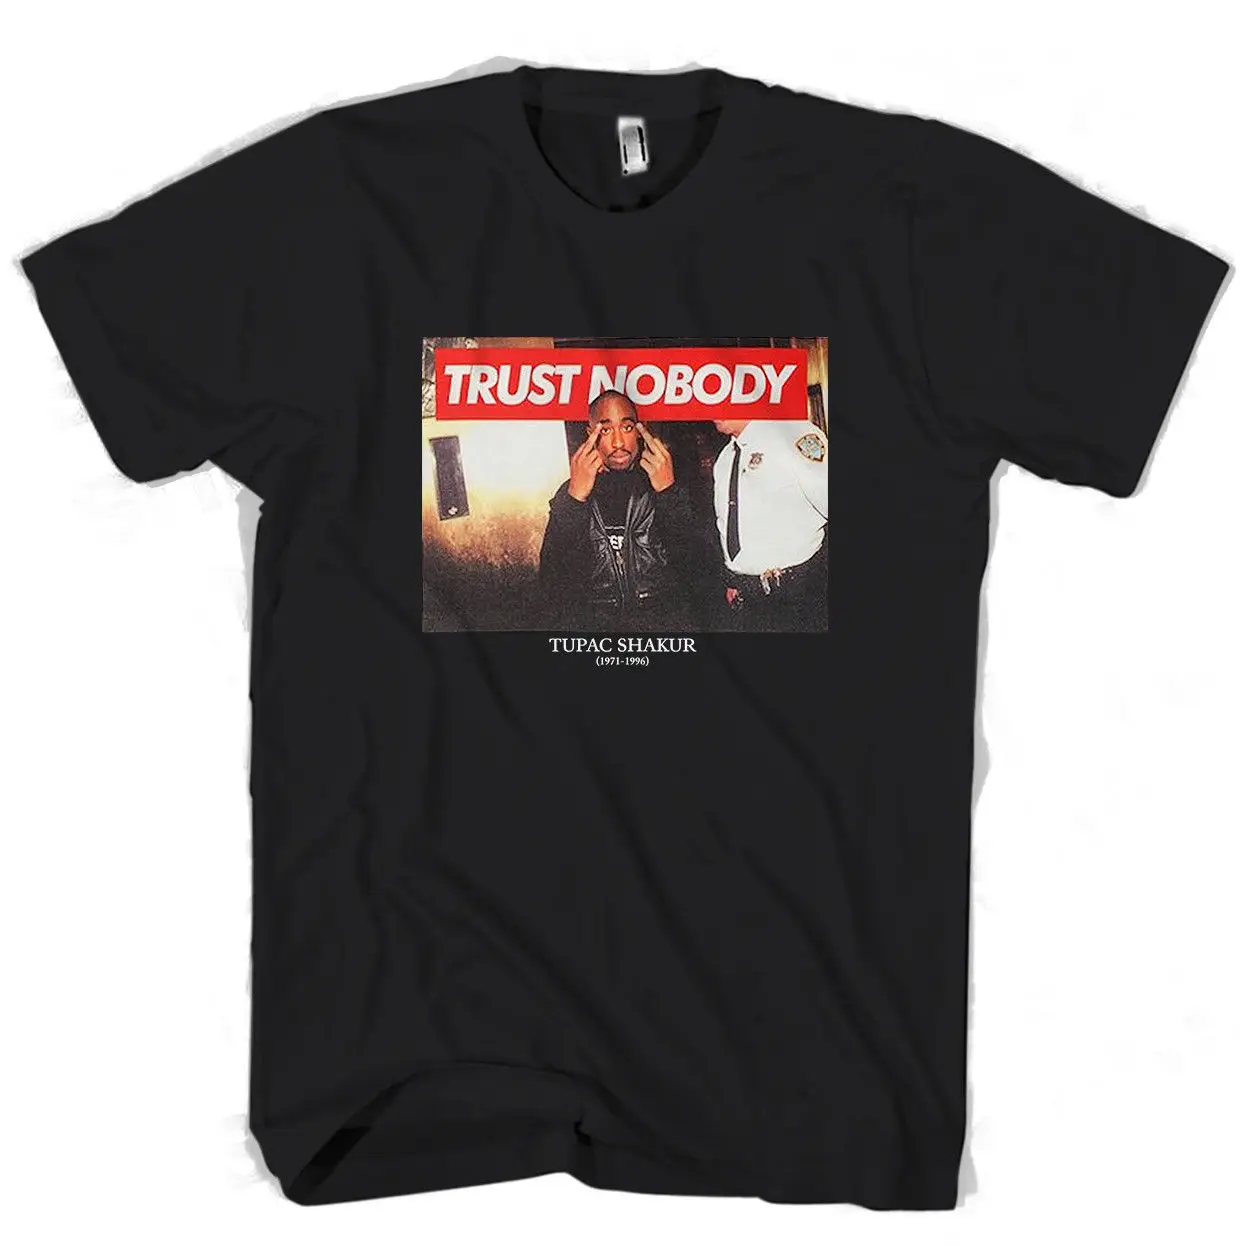 Мужская/Женская футболка в стиле унисекс модная Tupac 2Pac Shakur Me Against The World Trust Nobody 2019 |